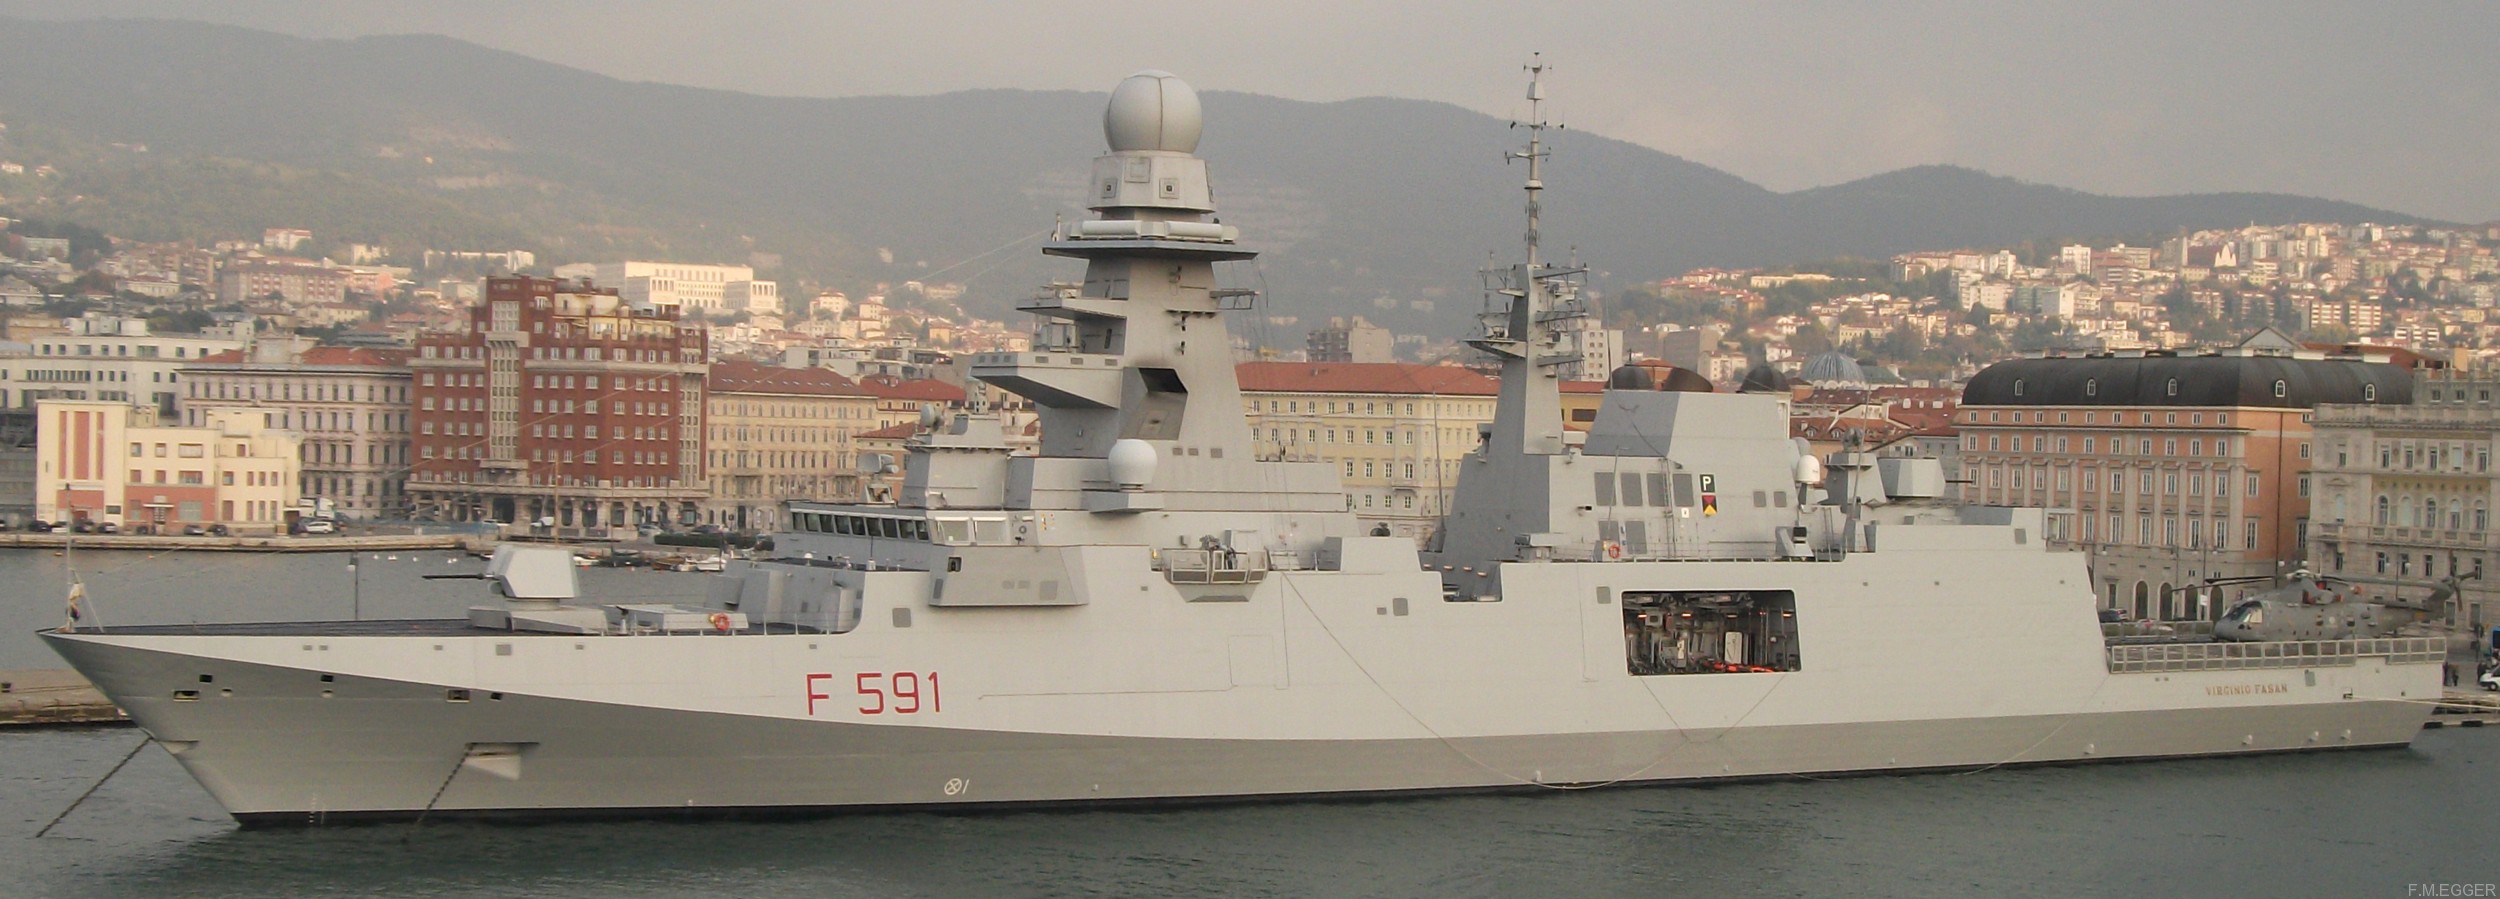 f-591 virginio fasan its nave bergamini fremm class guided missile frigate italian navy marina militare x40 trieste port